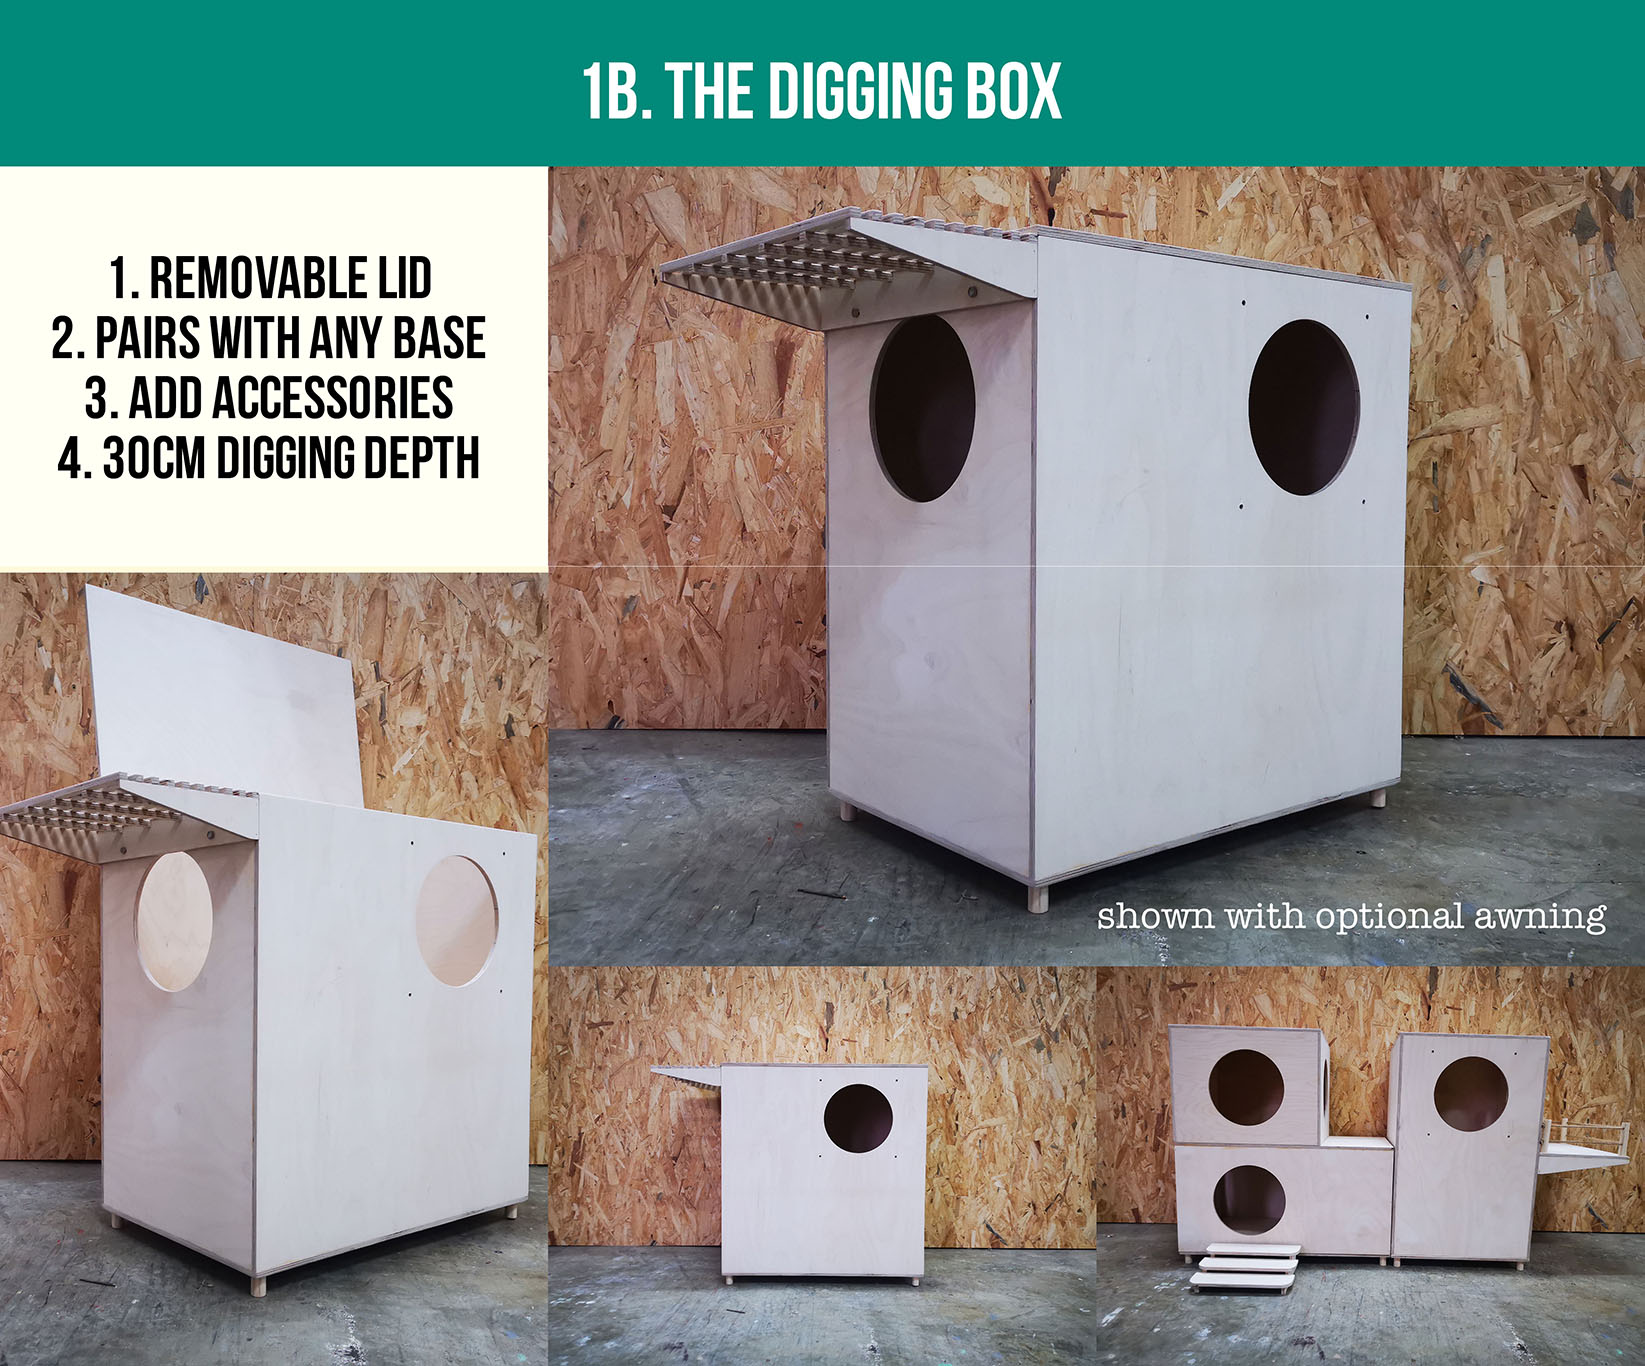 Uncommon Goods Modular Rabbit and Guinea Pig Habitat Digging Box